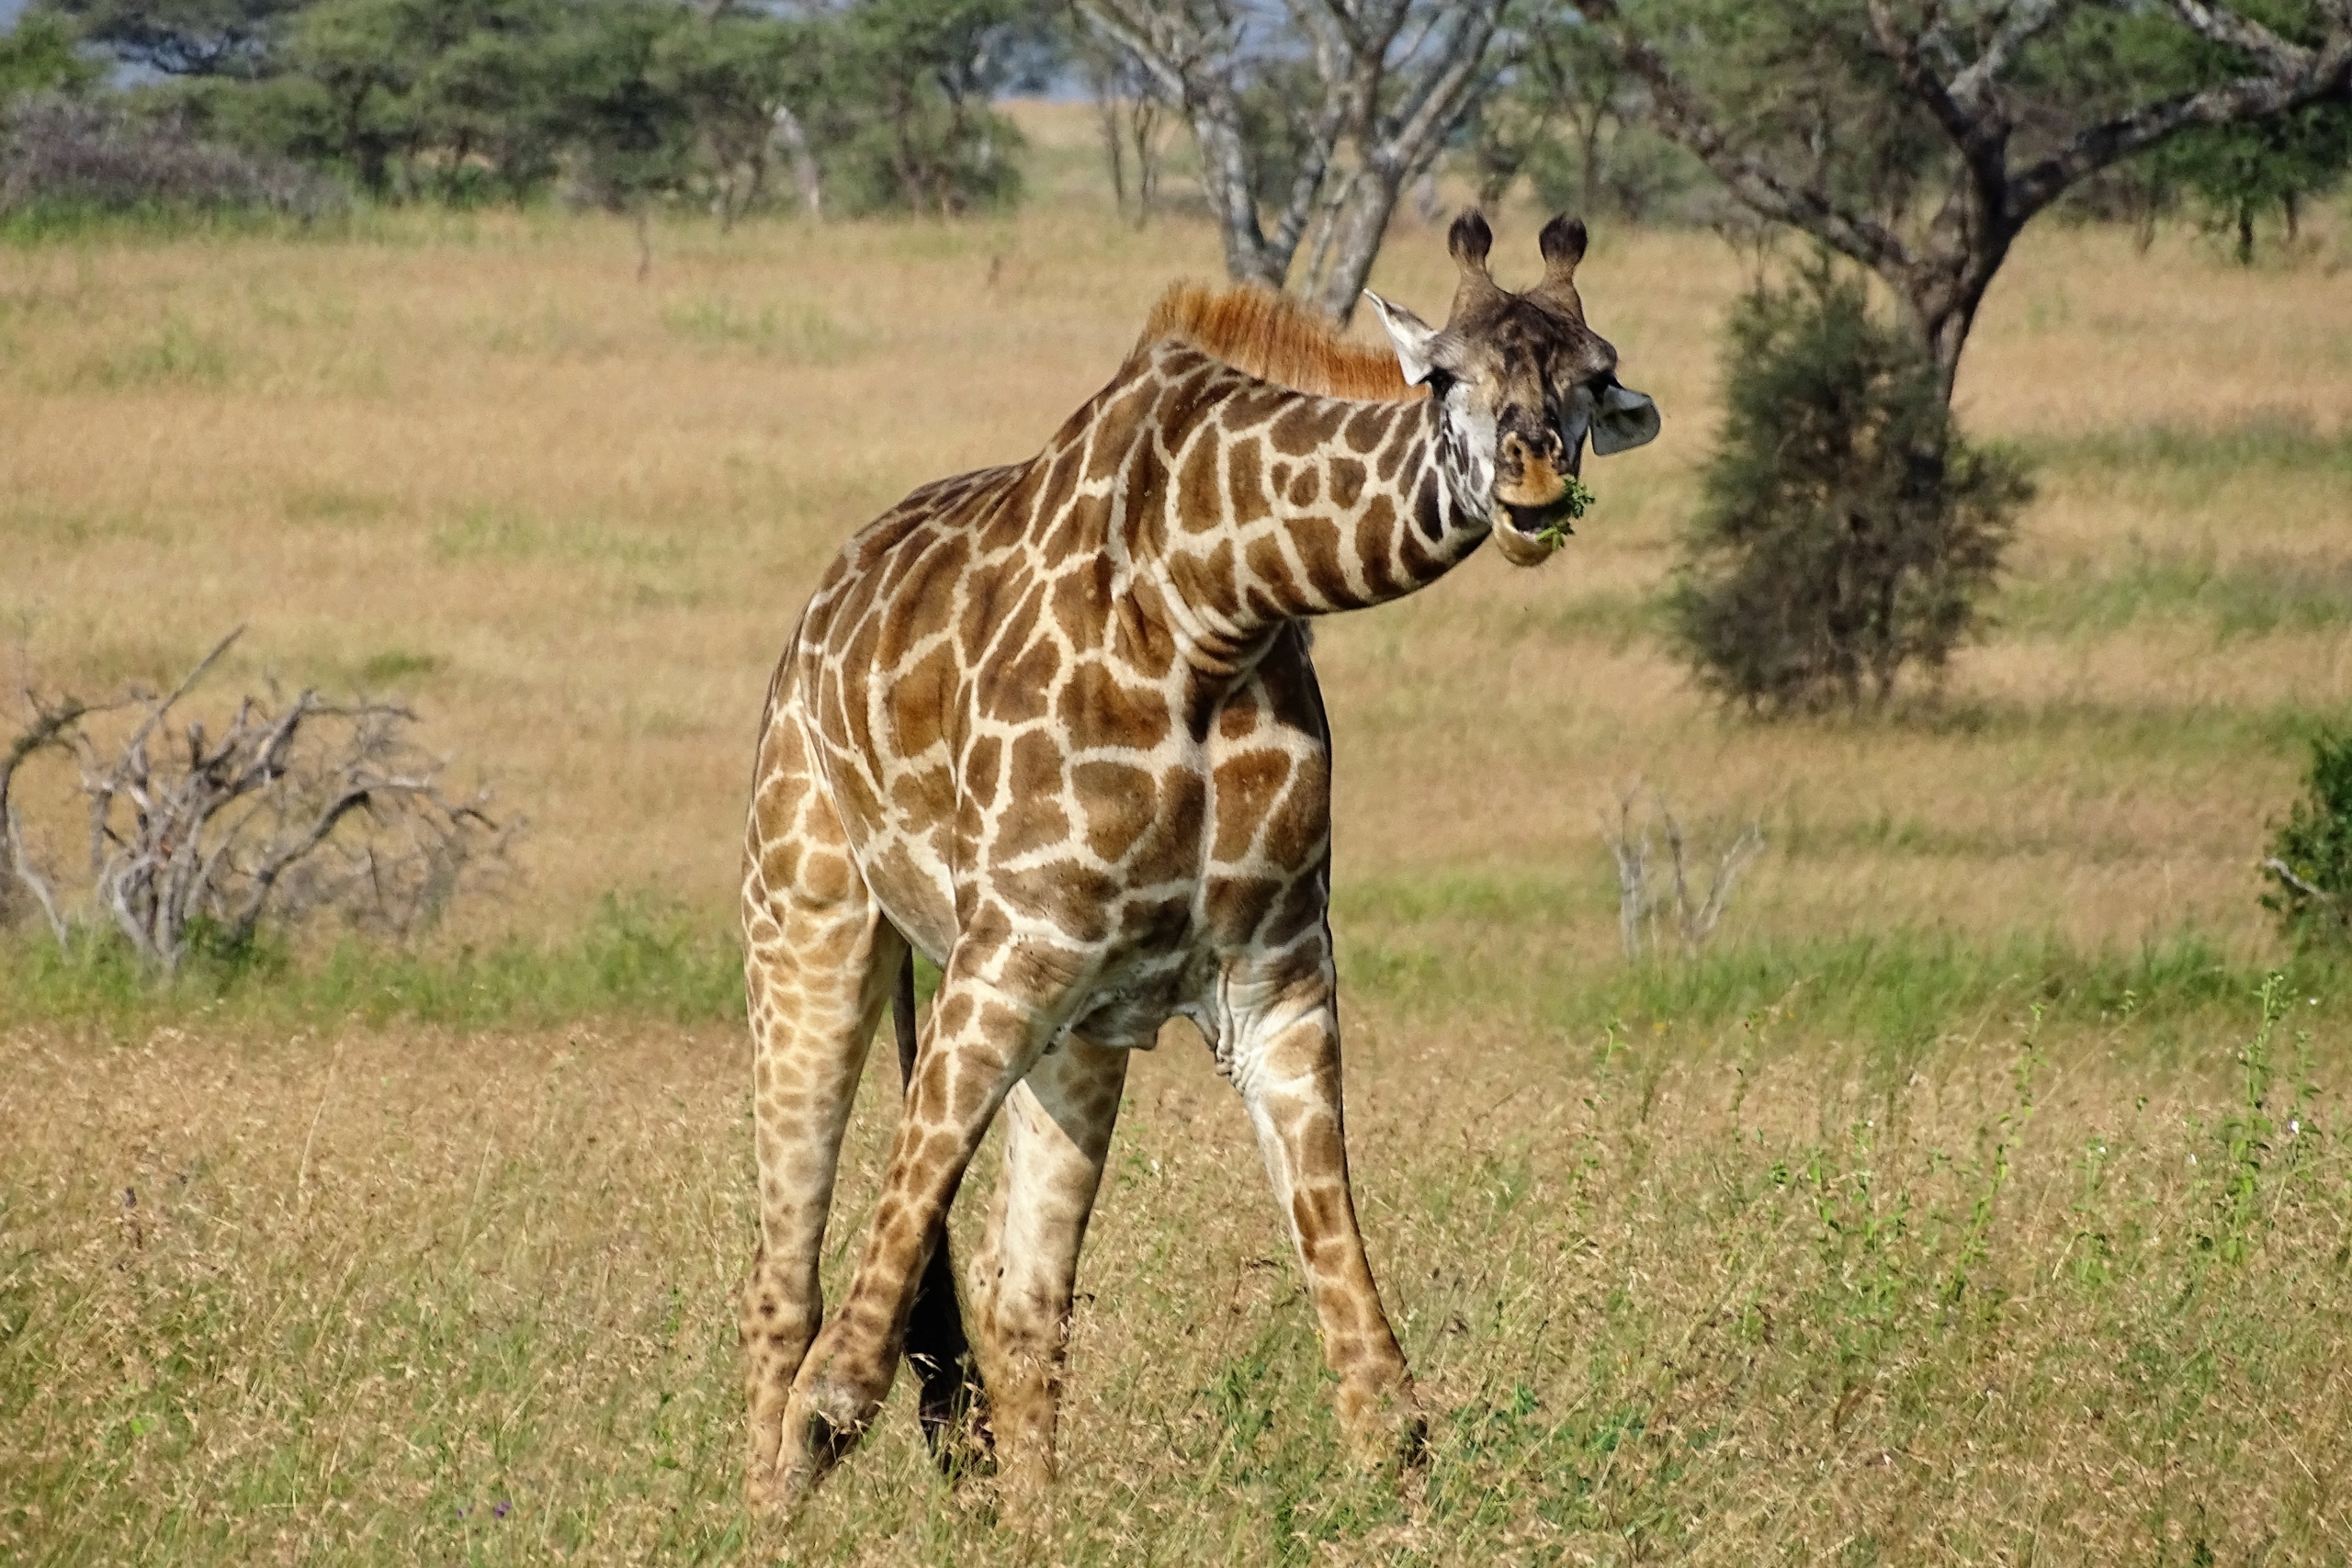 Giraffe in der Serengeti